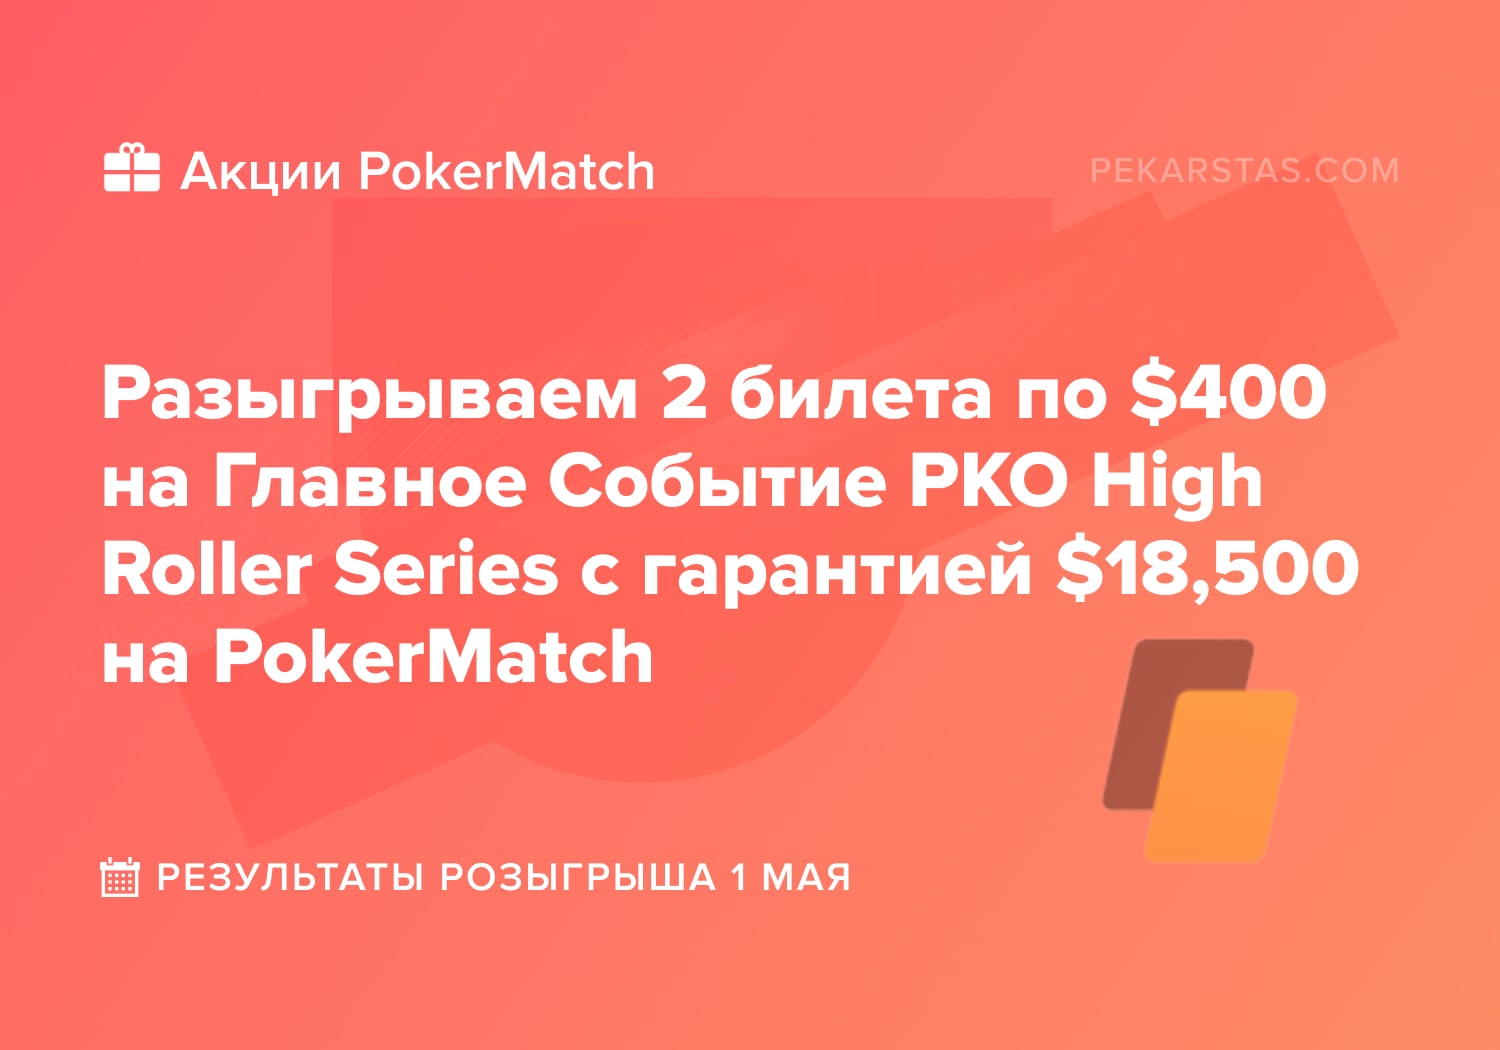 pokermatch pko high roller series